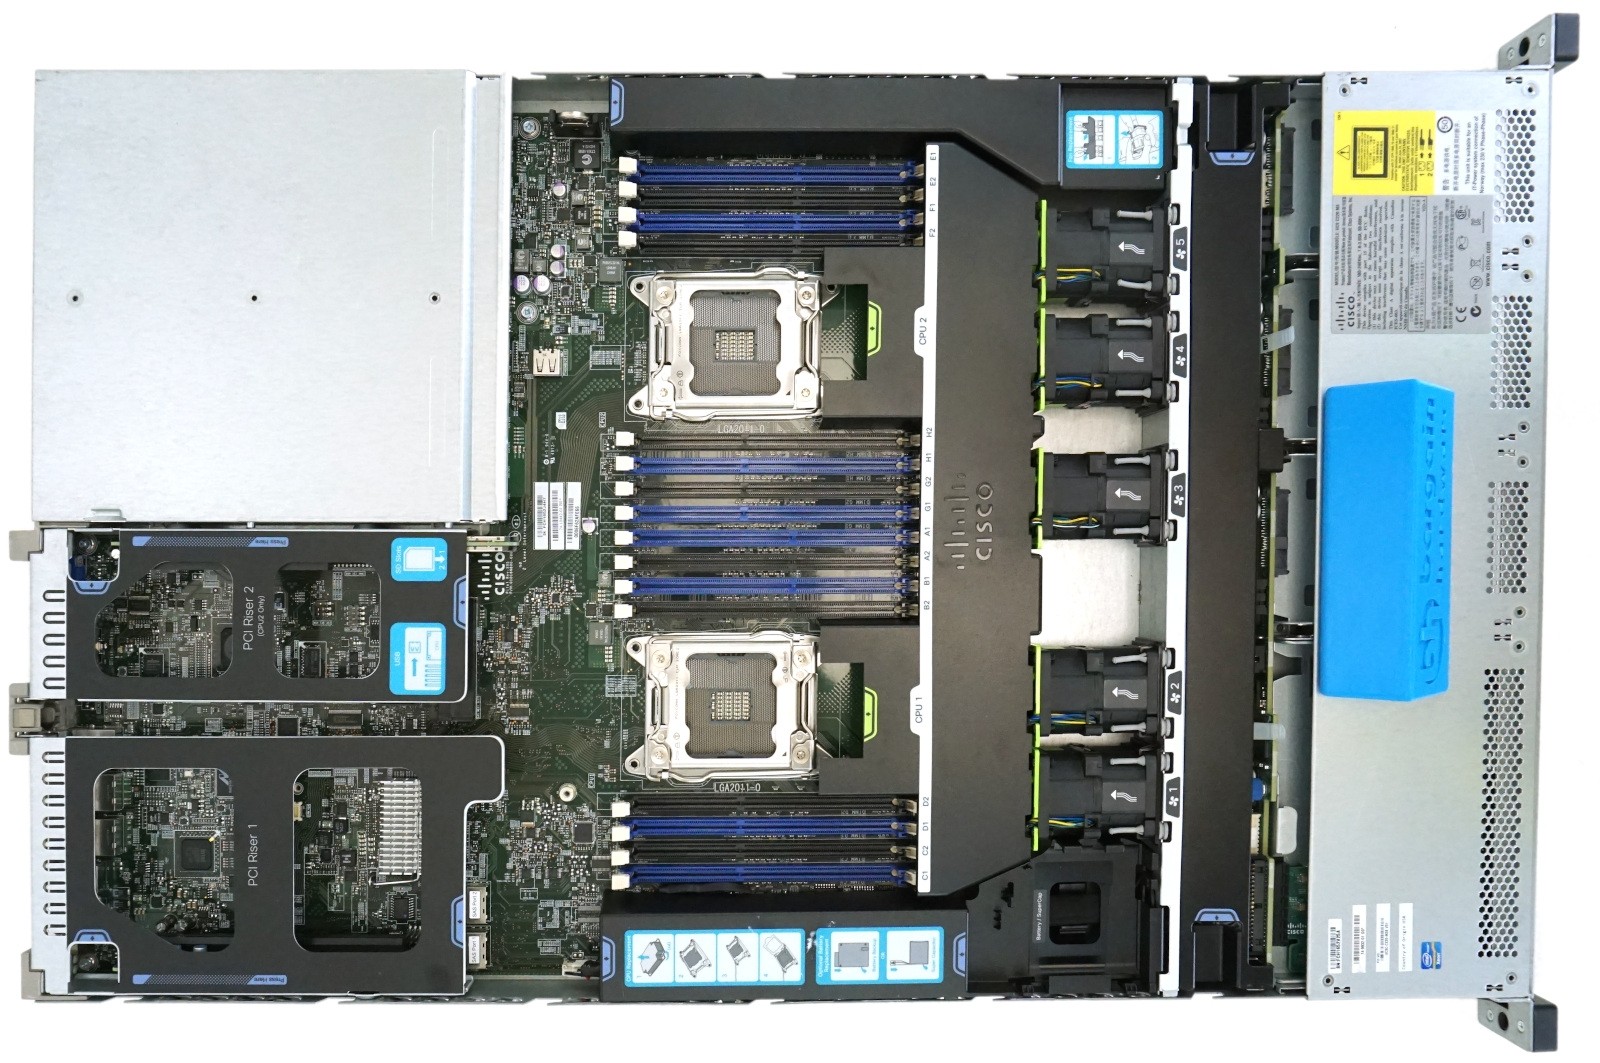 48GB PC3-10600R 1333MHz DDR3 ECC Registered Memory Kit for a Cisco UCS C240 M3 Server 12x4GB Certified Refurbished 